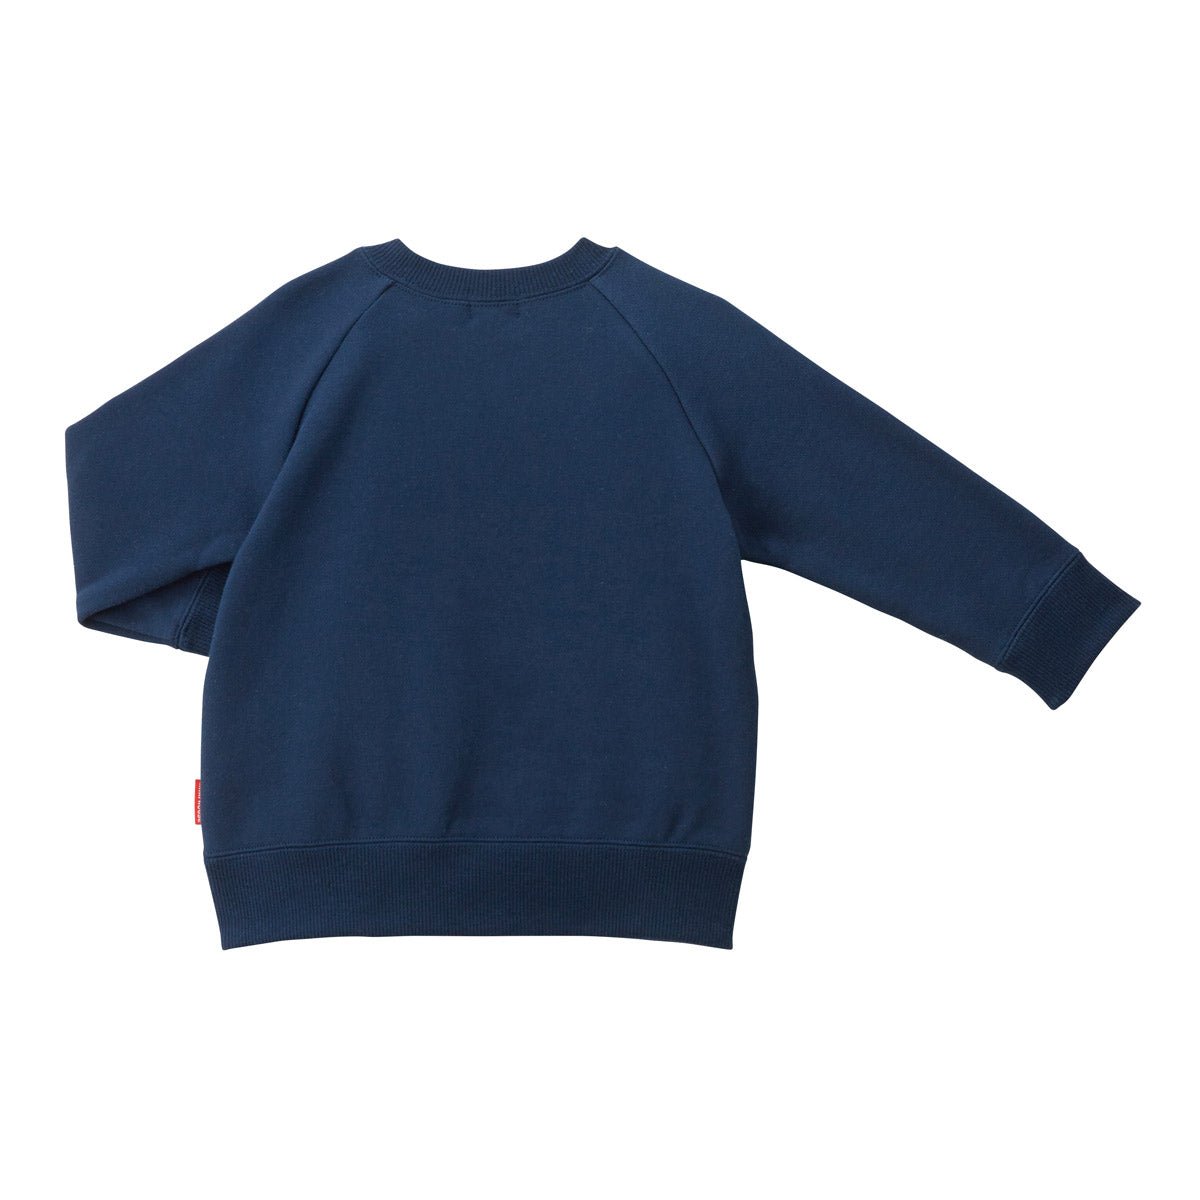 MIKI HOUSE Embroidered Logo Sweatshirt Classic - 10-5605-386-03-80